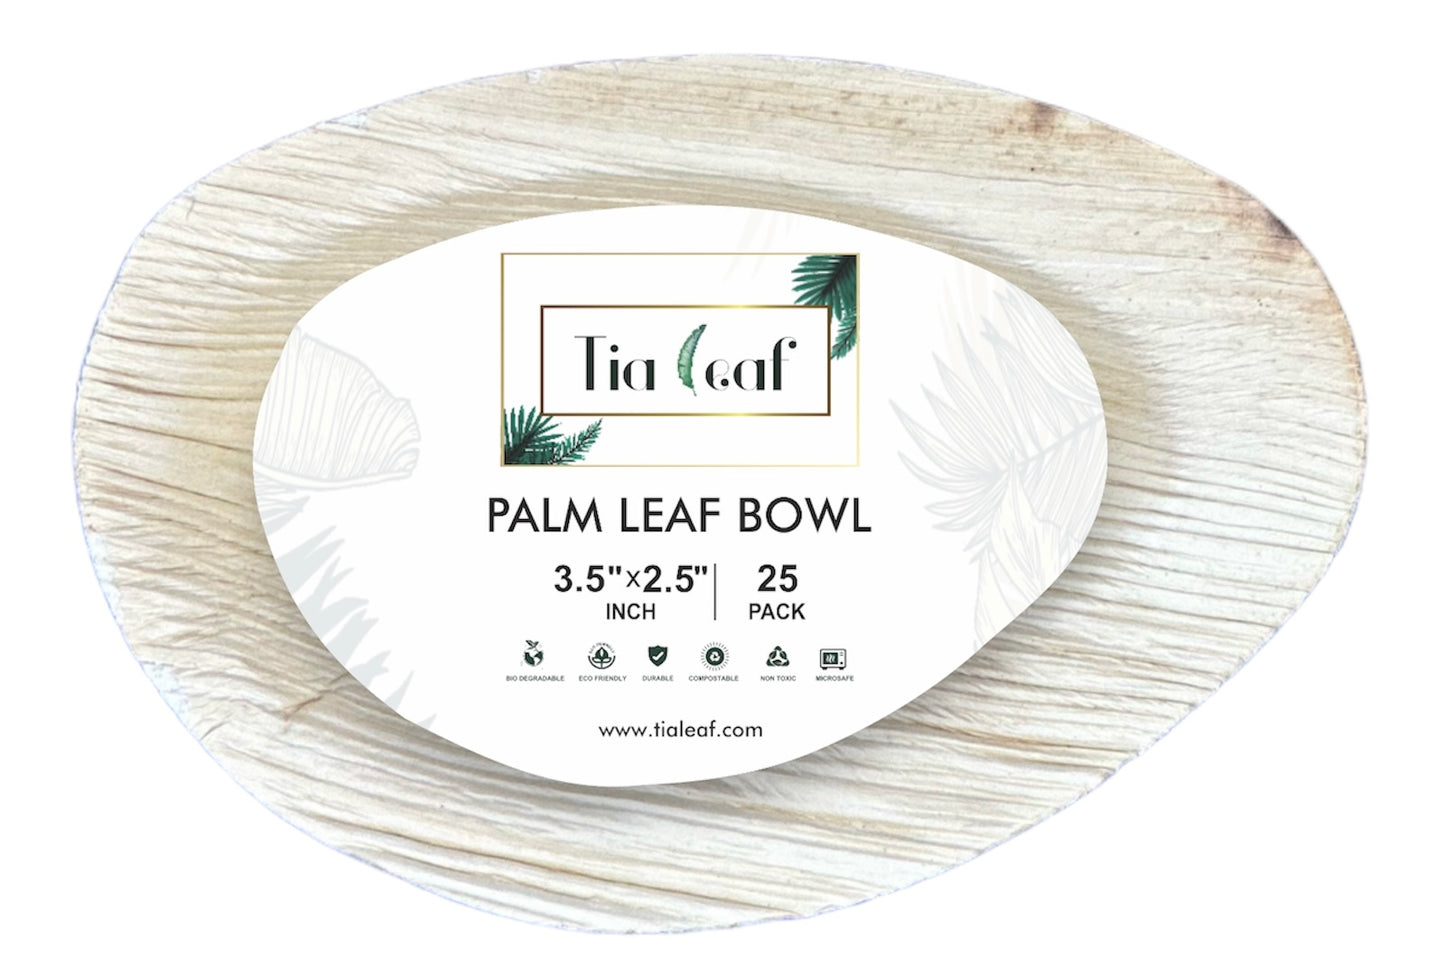 3.5x2.5" Oval Palm Leaf Bowls